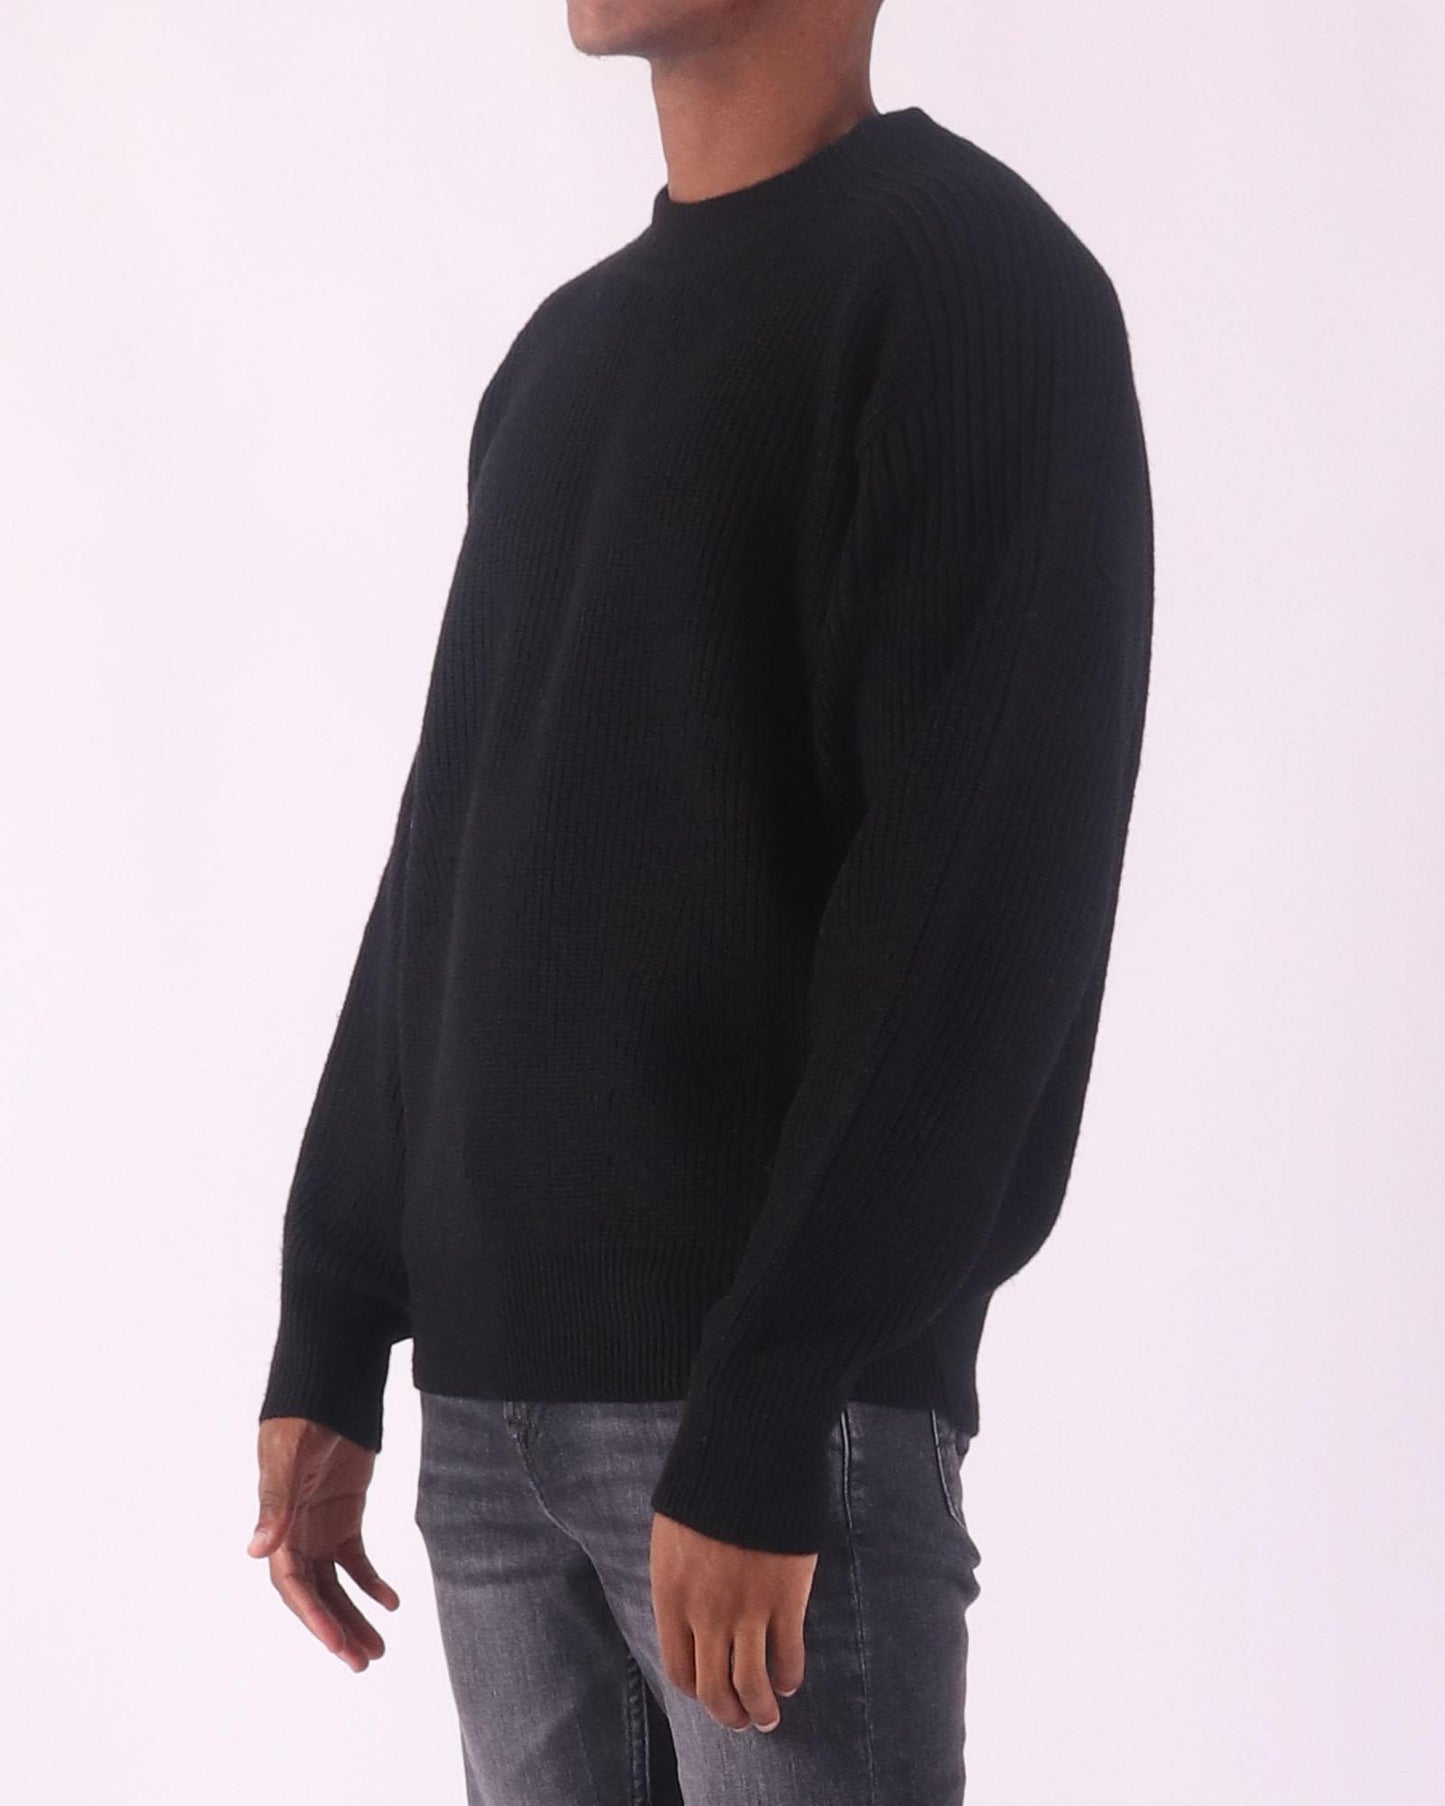 Marant Truien / Sweaters